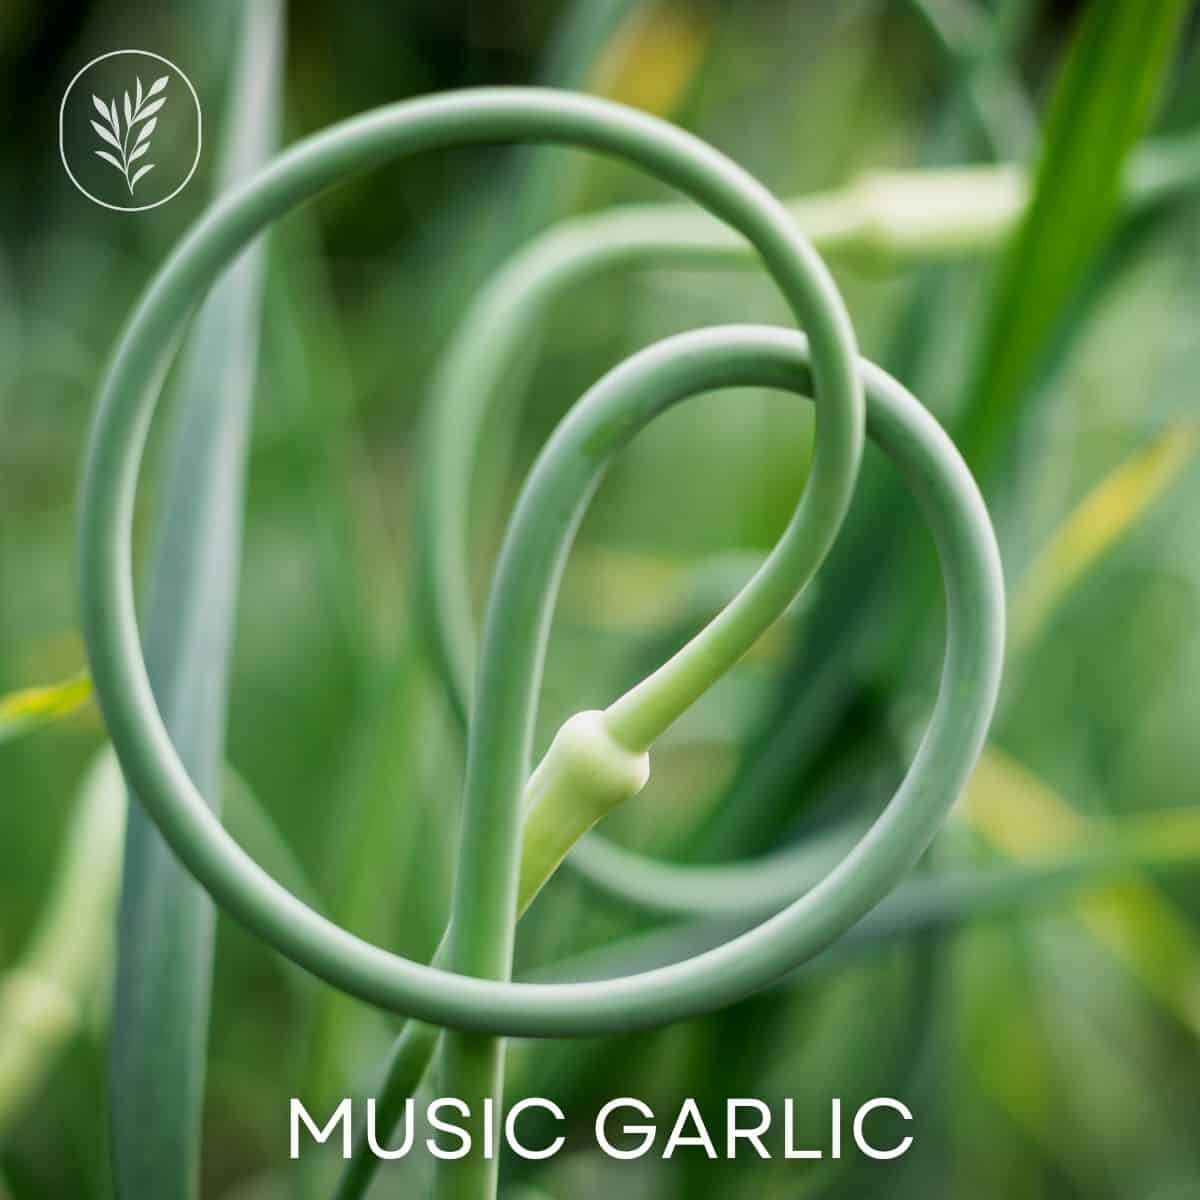 Music garlic via @home4theharvest